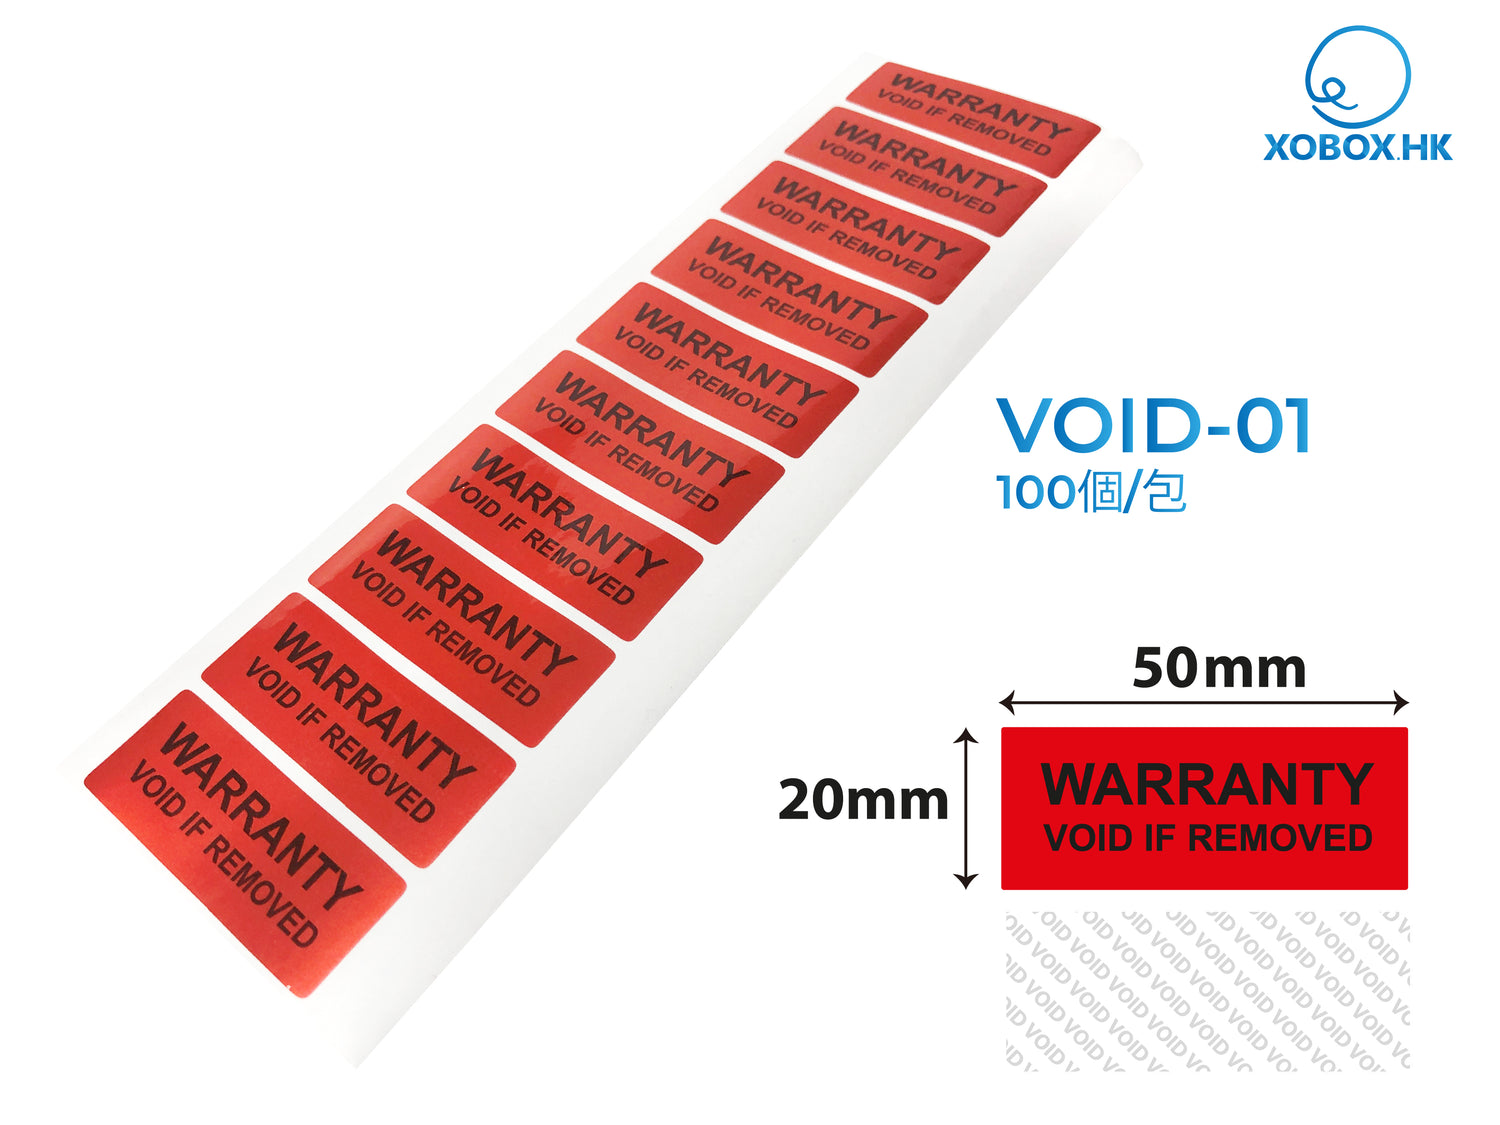 Security Seal Warranty Void Sticker Label 安全防護封條標籤貼紙